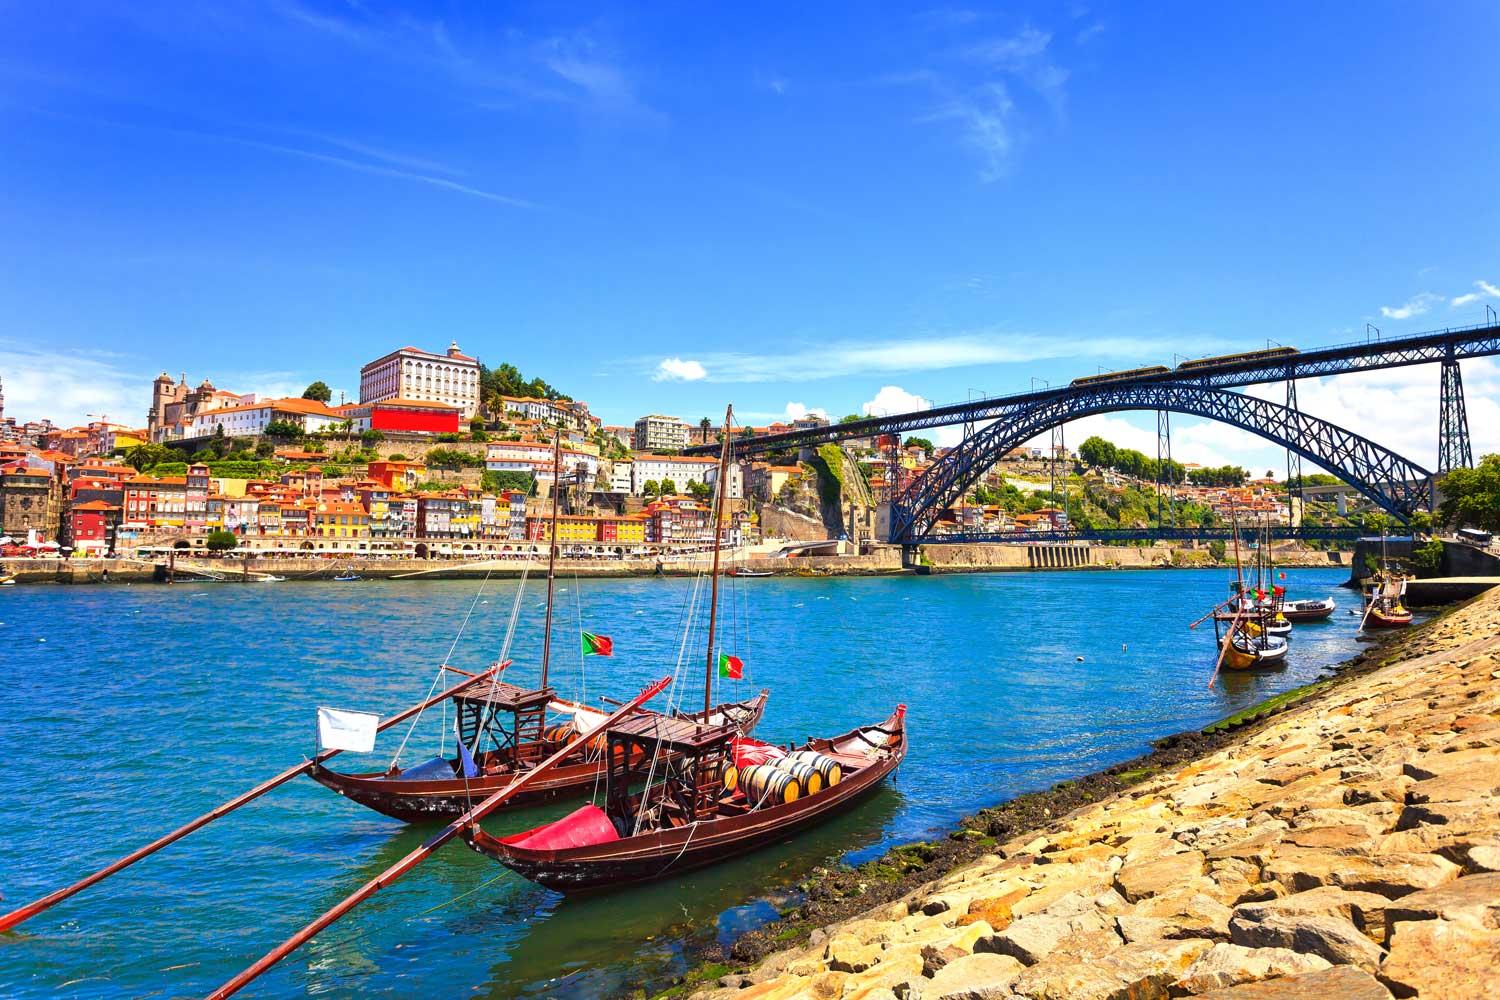 OPORTO CRUCEROS FLUVIALES CRUCEROS DUERO DOURO CRUISES CREUERS BIDAIAK #Porto #Oporto #Portugal #CrucerosDuero